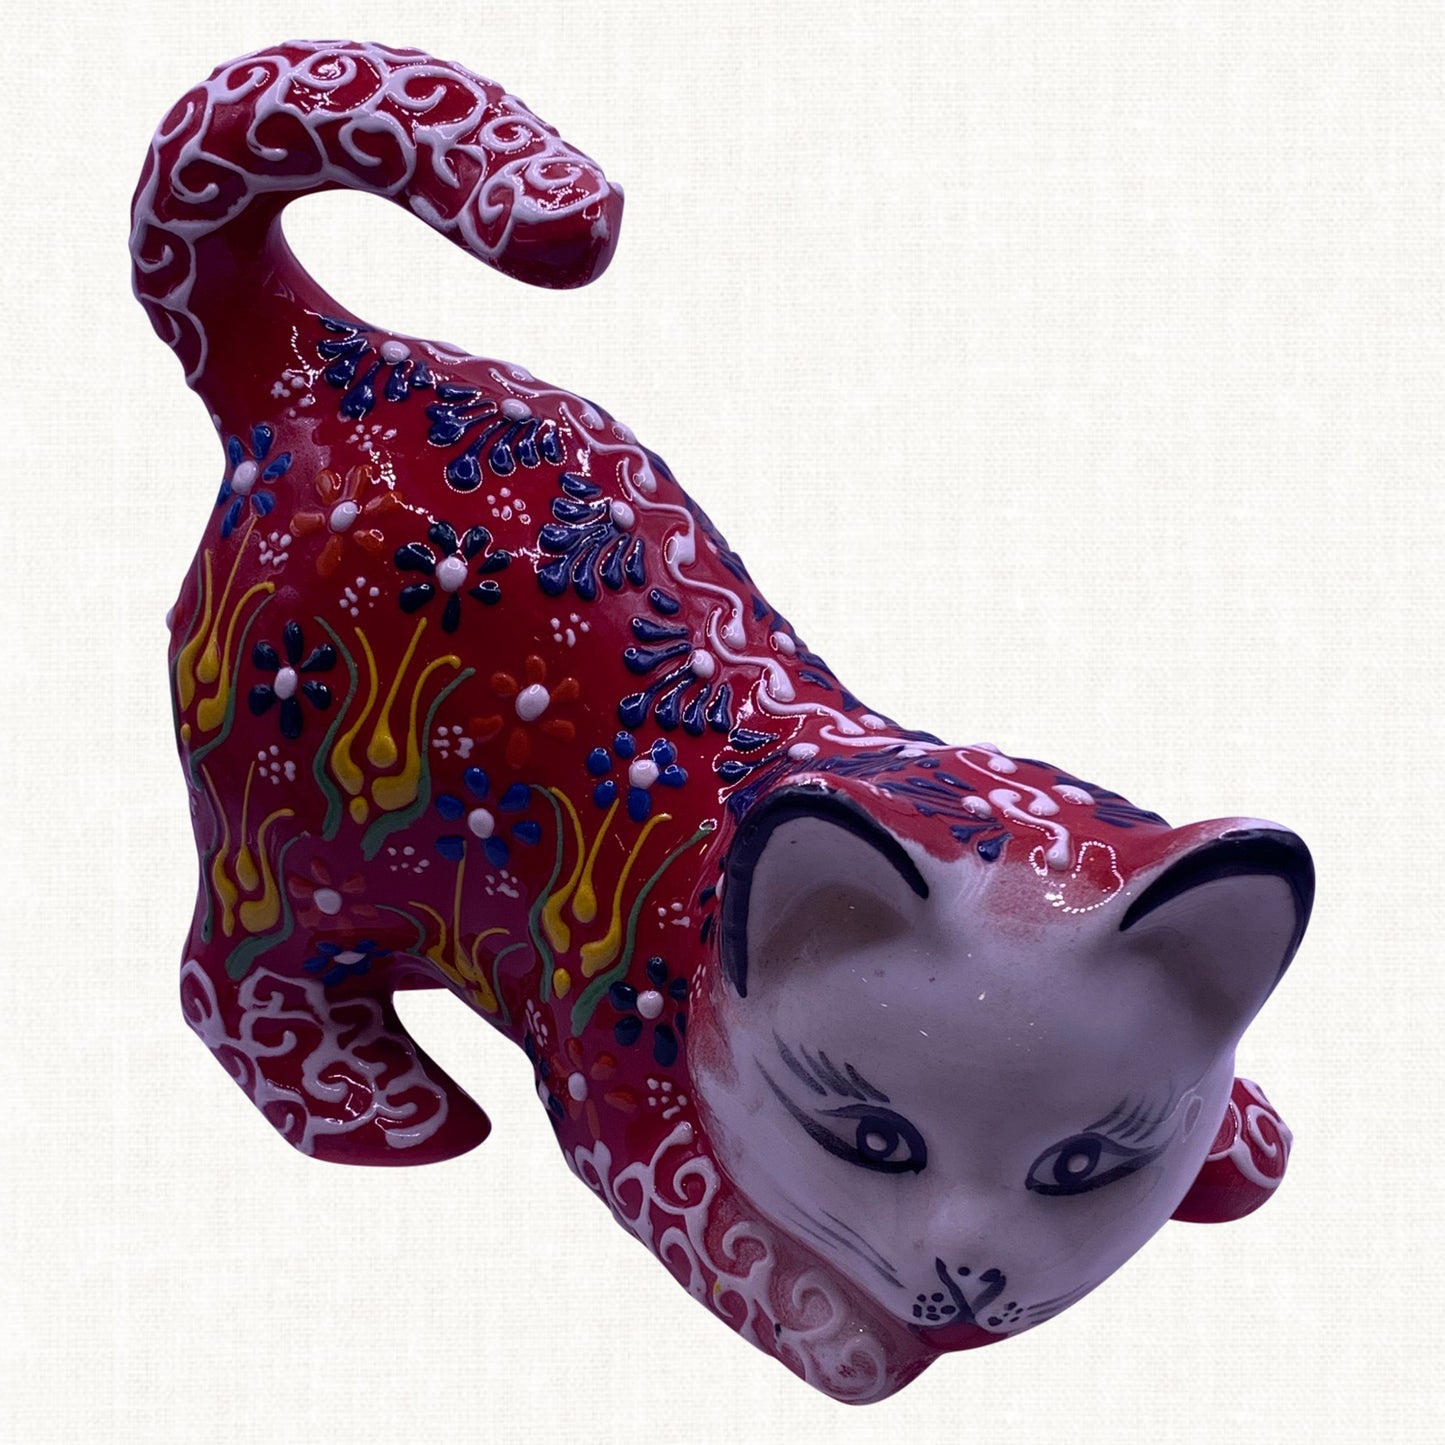 Meow Ceramic Cat For Home Decoration